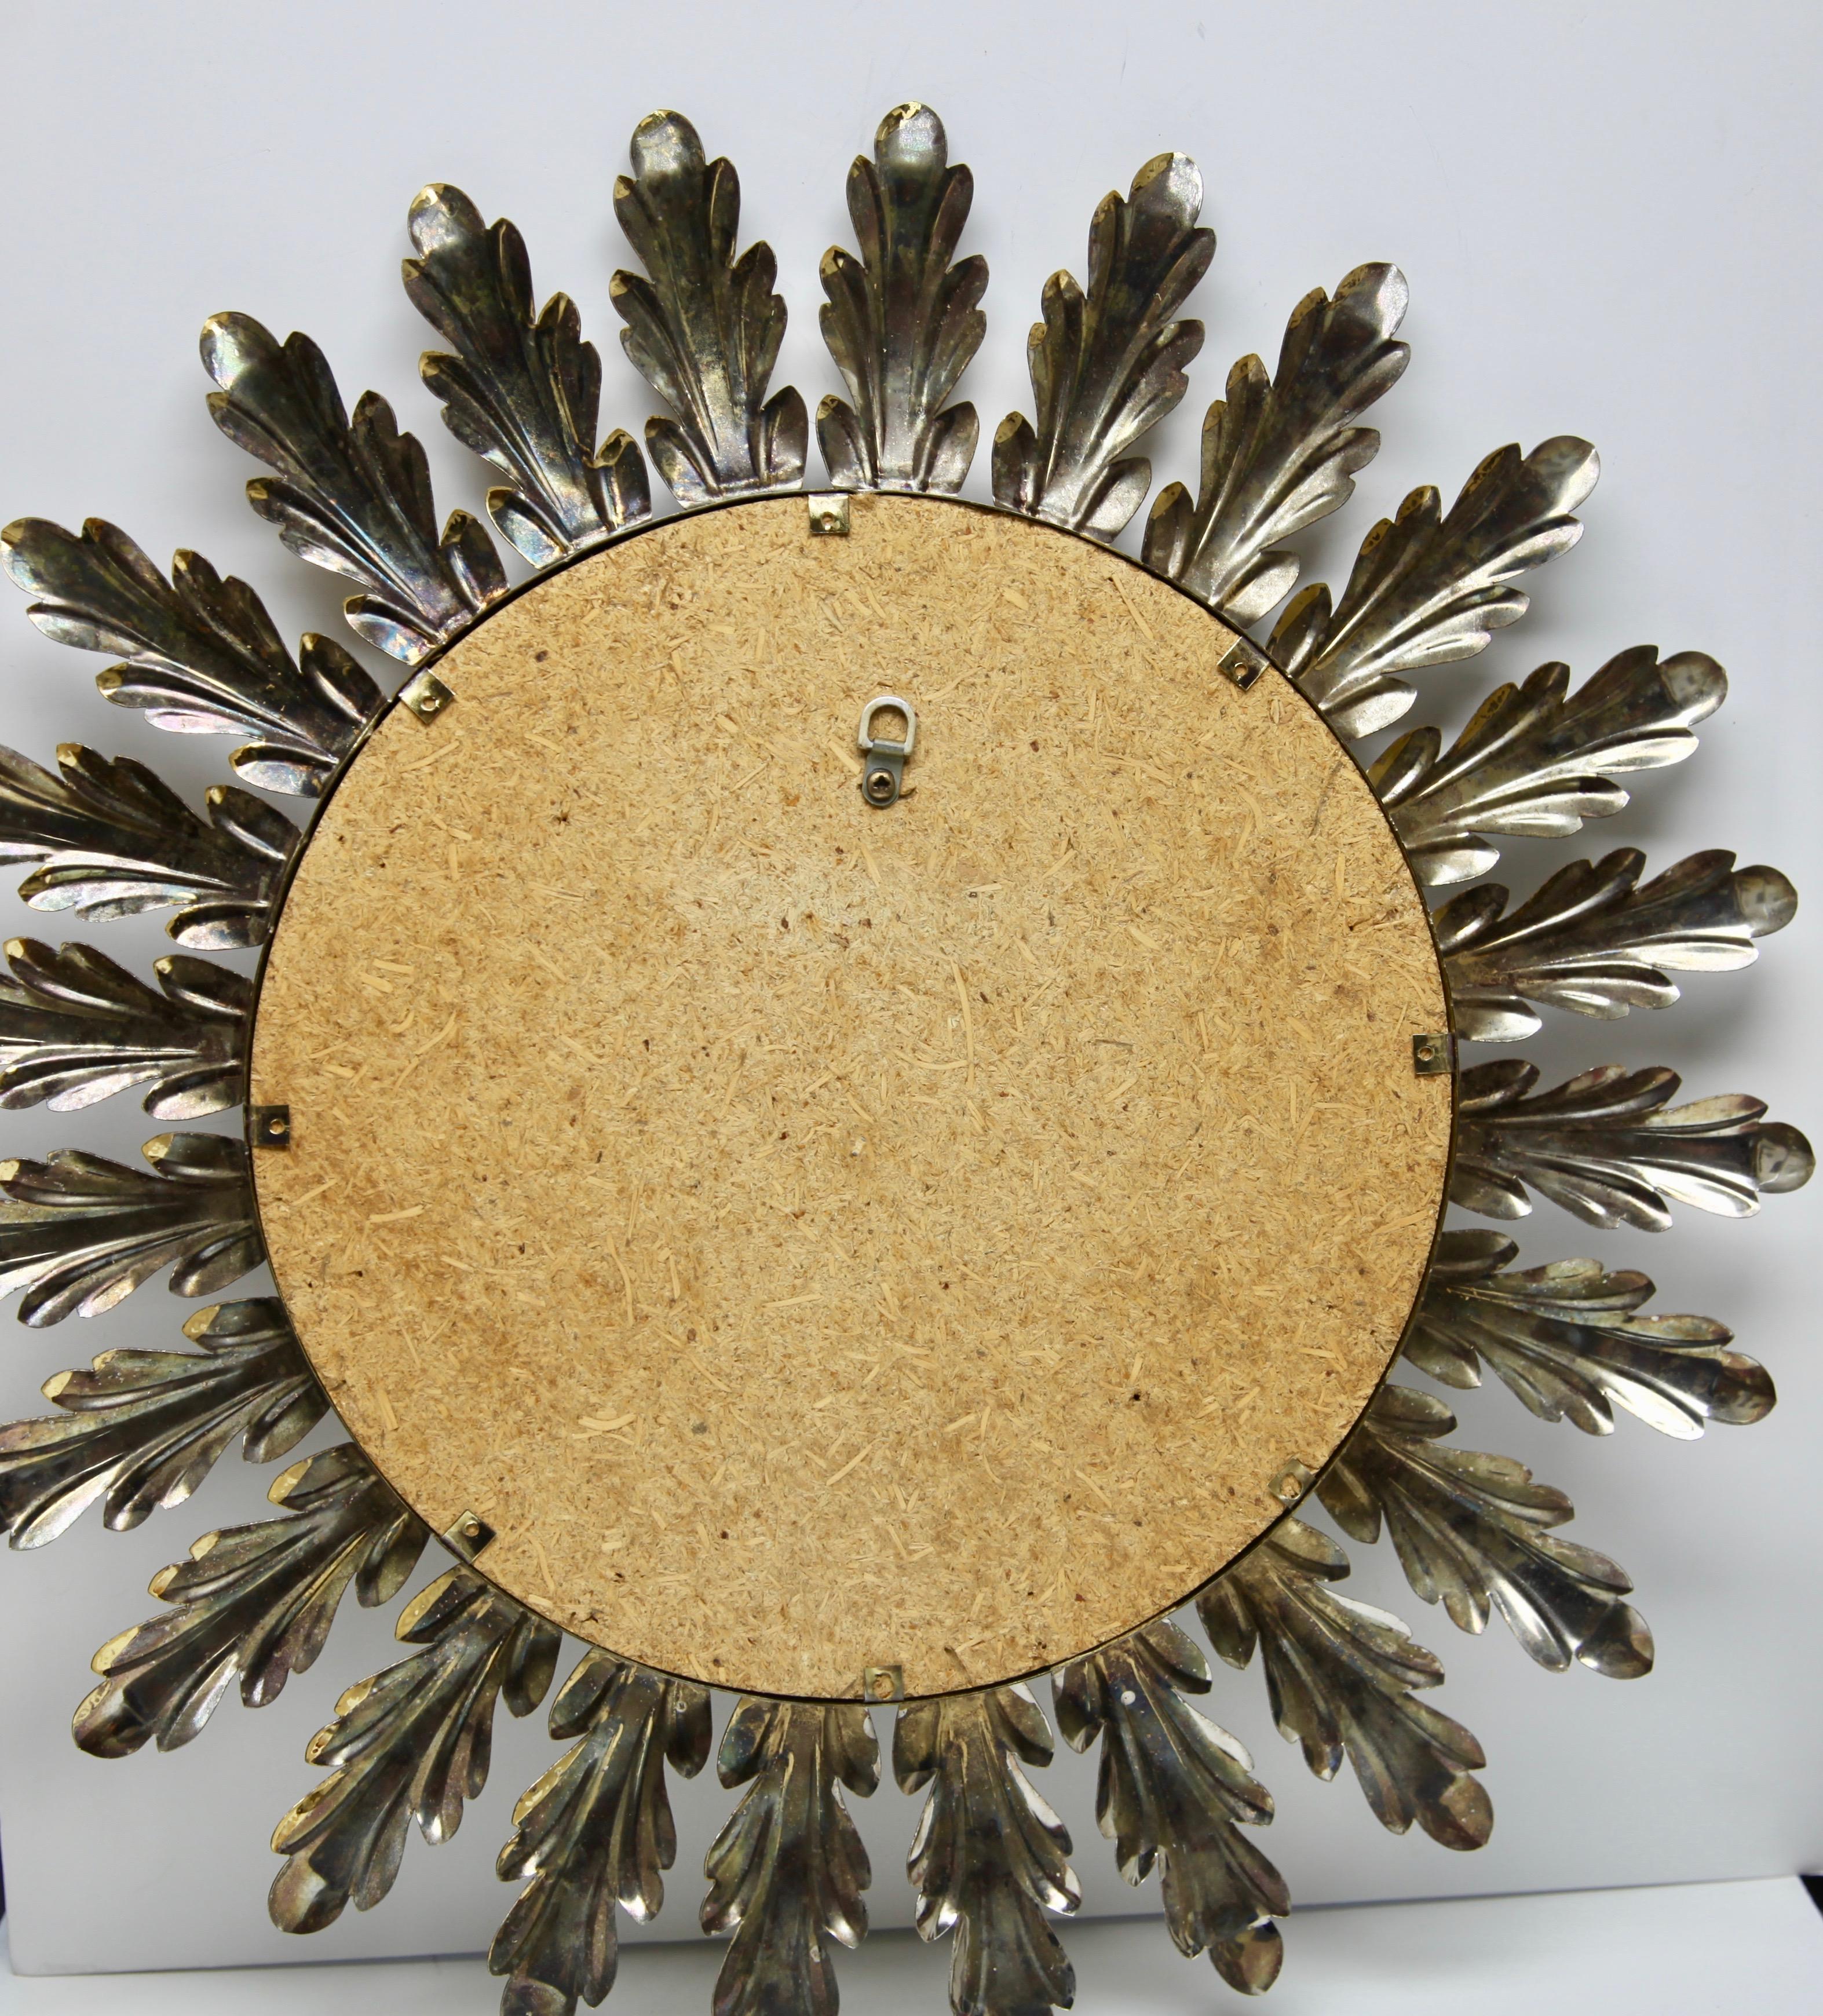 Hand-Crafted Sunburst Mirror with Convex Mirror Made by Factory Deknudt in Belgium, 1950s